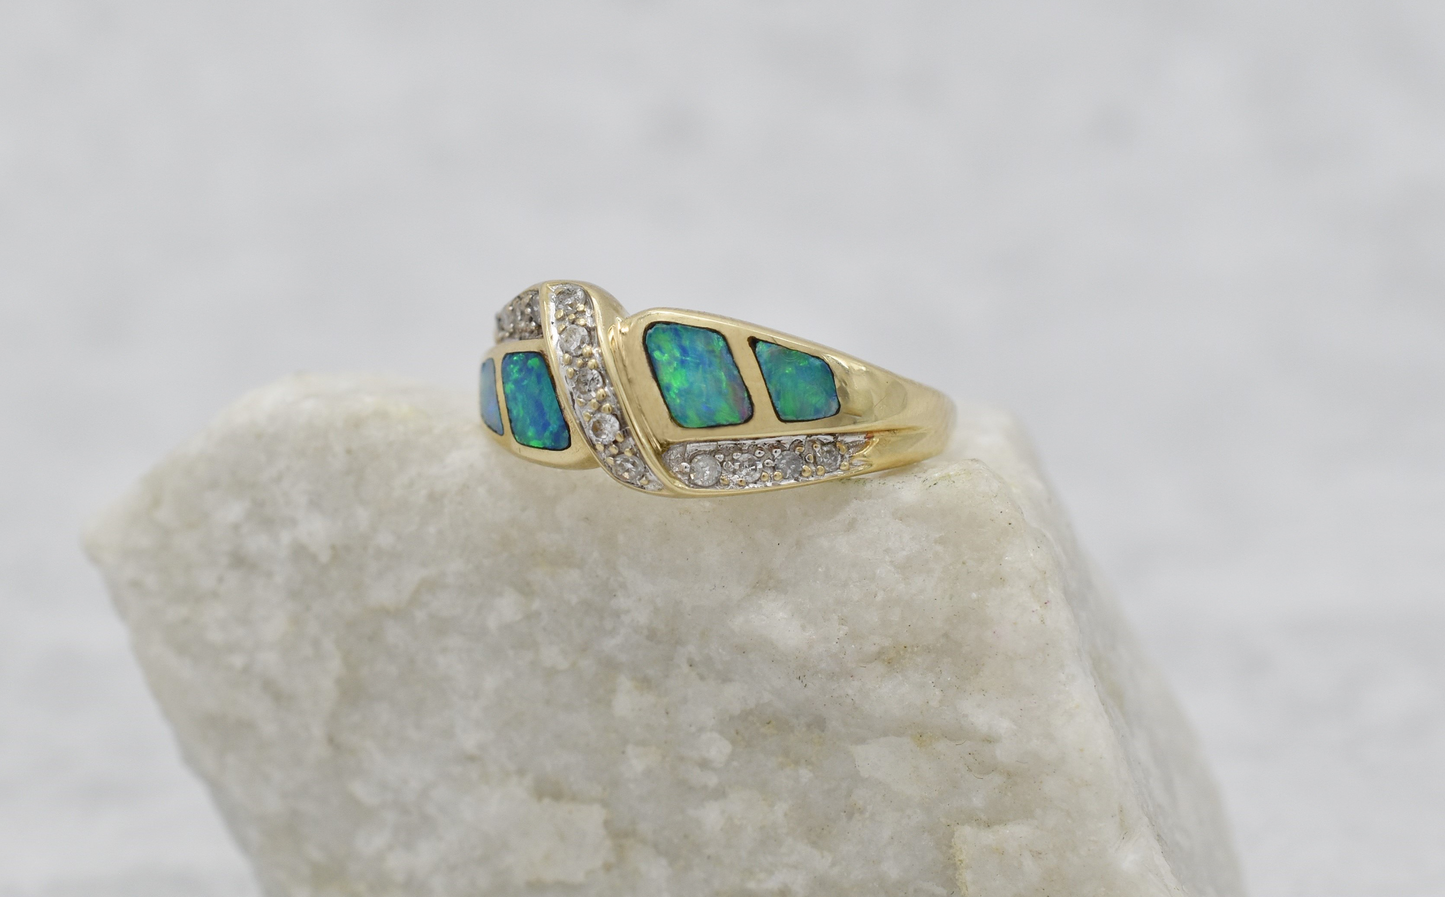 14k Yellow Gold Diamond & Opal Ring, Size 7.25 - 4.0g